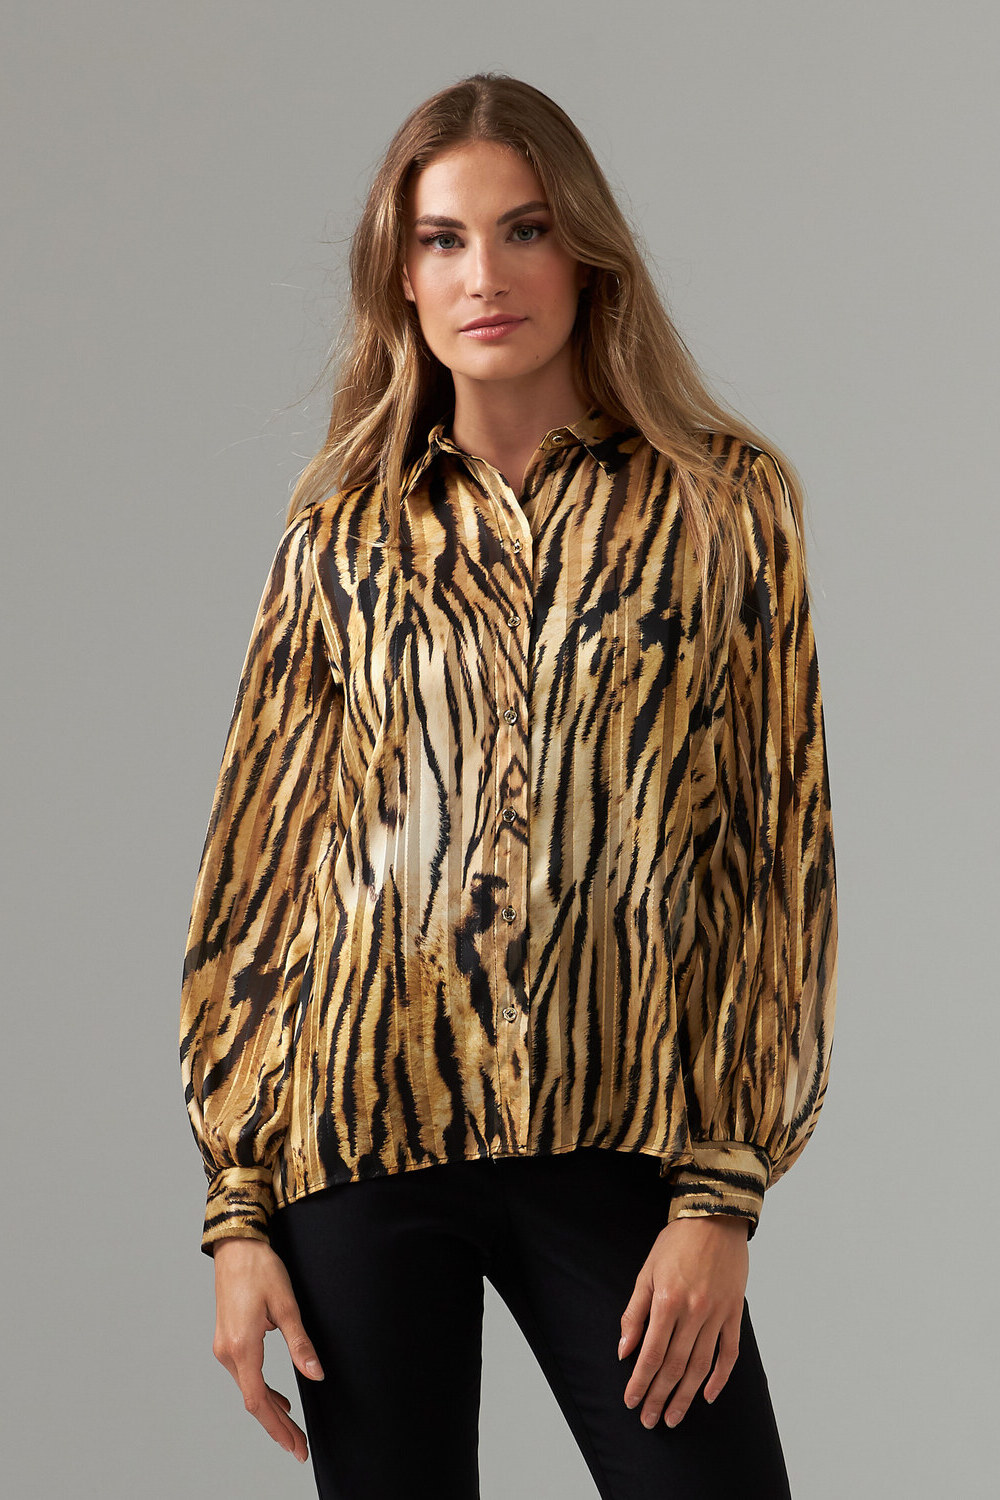 Joseph Ribkoff blouse style 203682. Noir/or